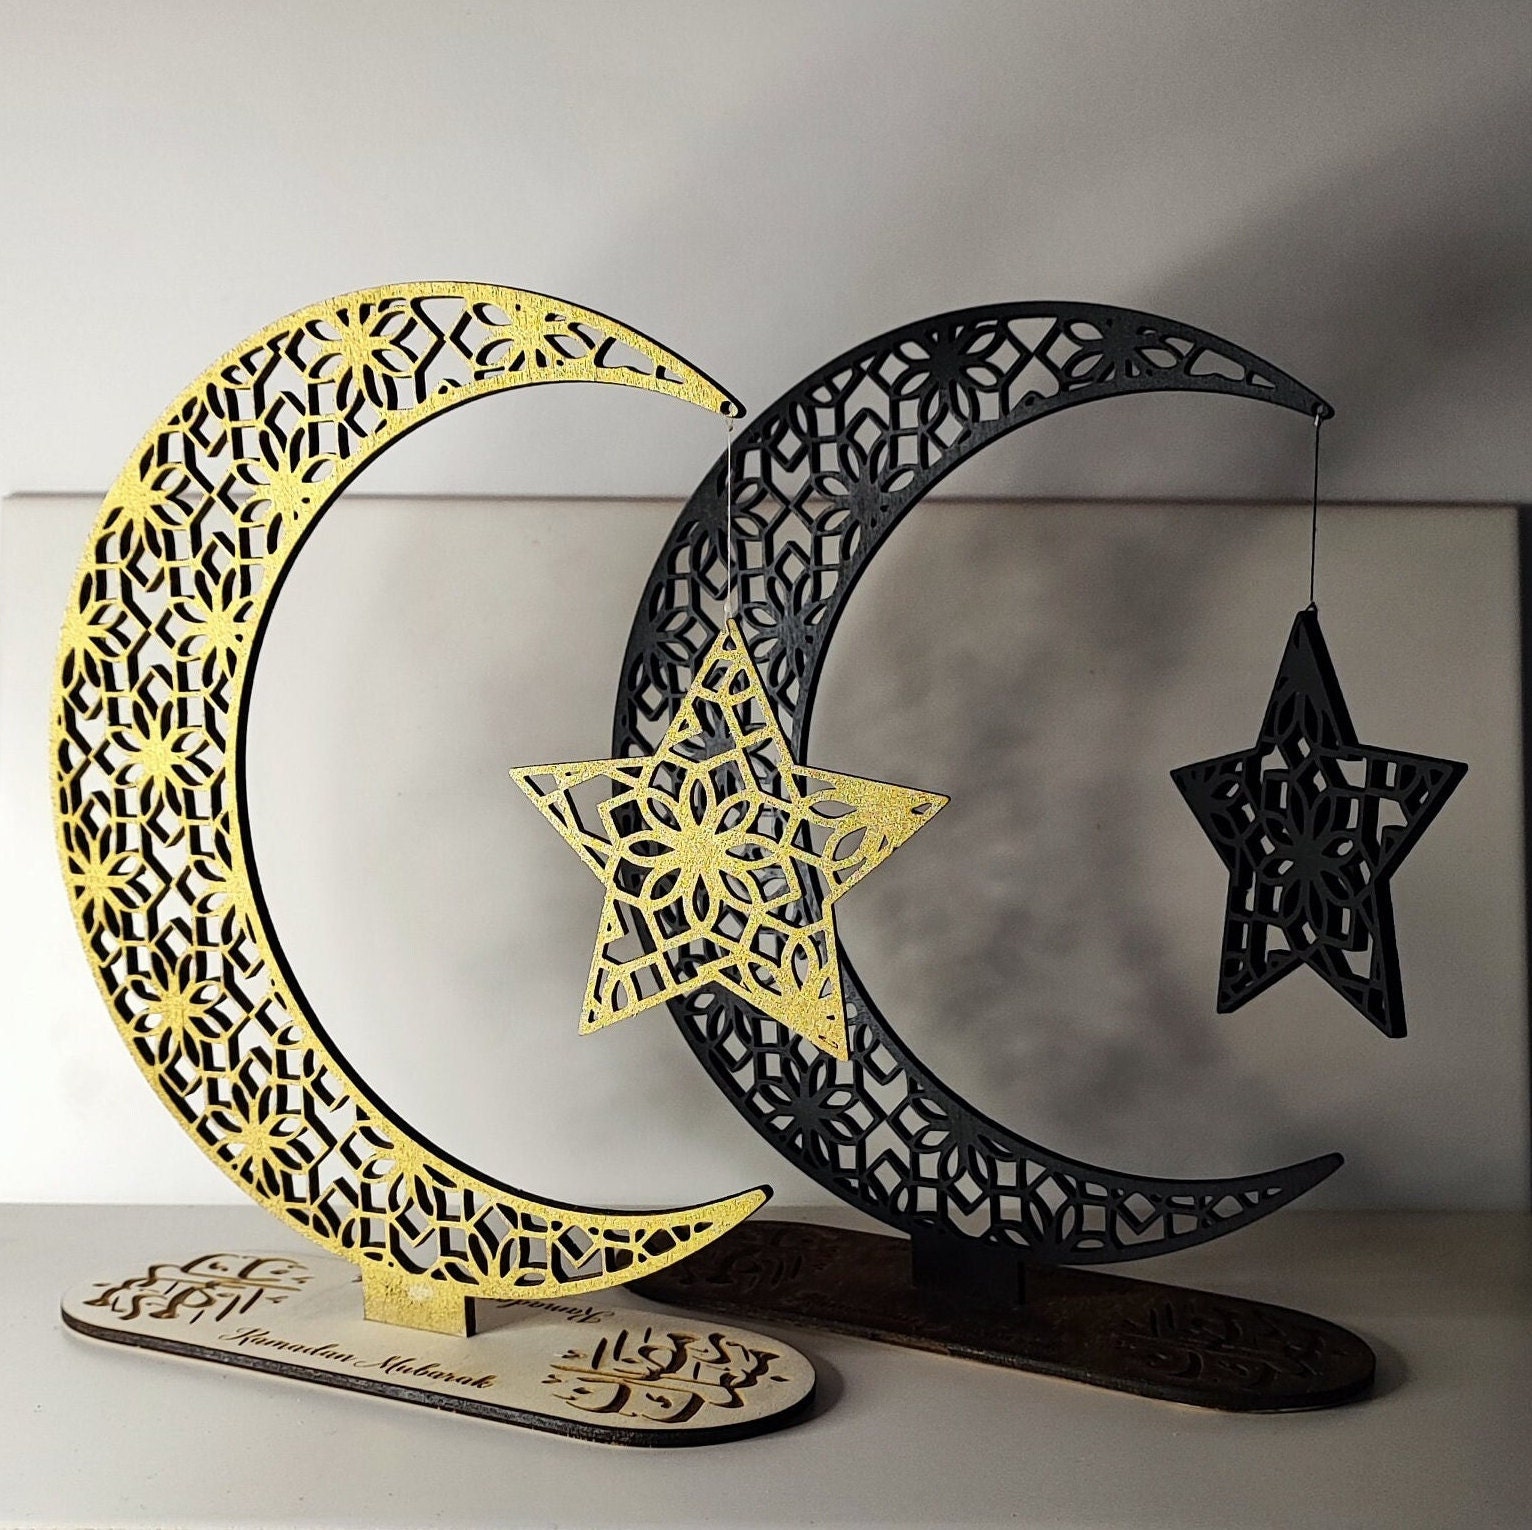 8 / 20 cm Holz Mond - LED Kerzenlicht Islam grün Islam Deko Ornament Stern